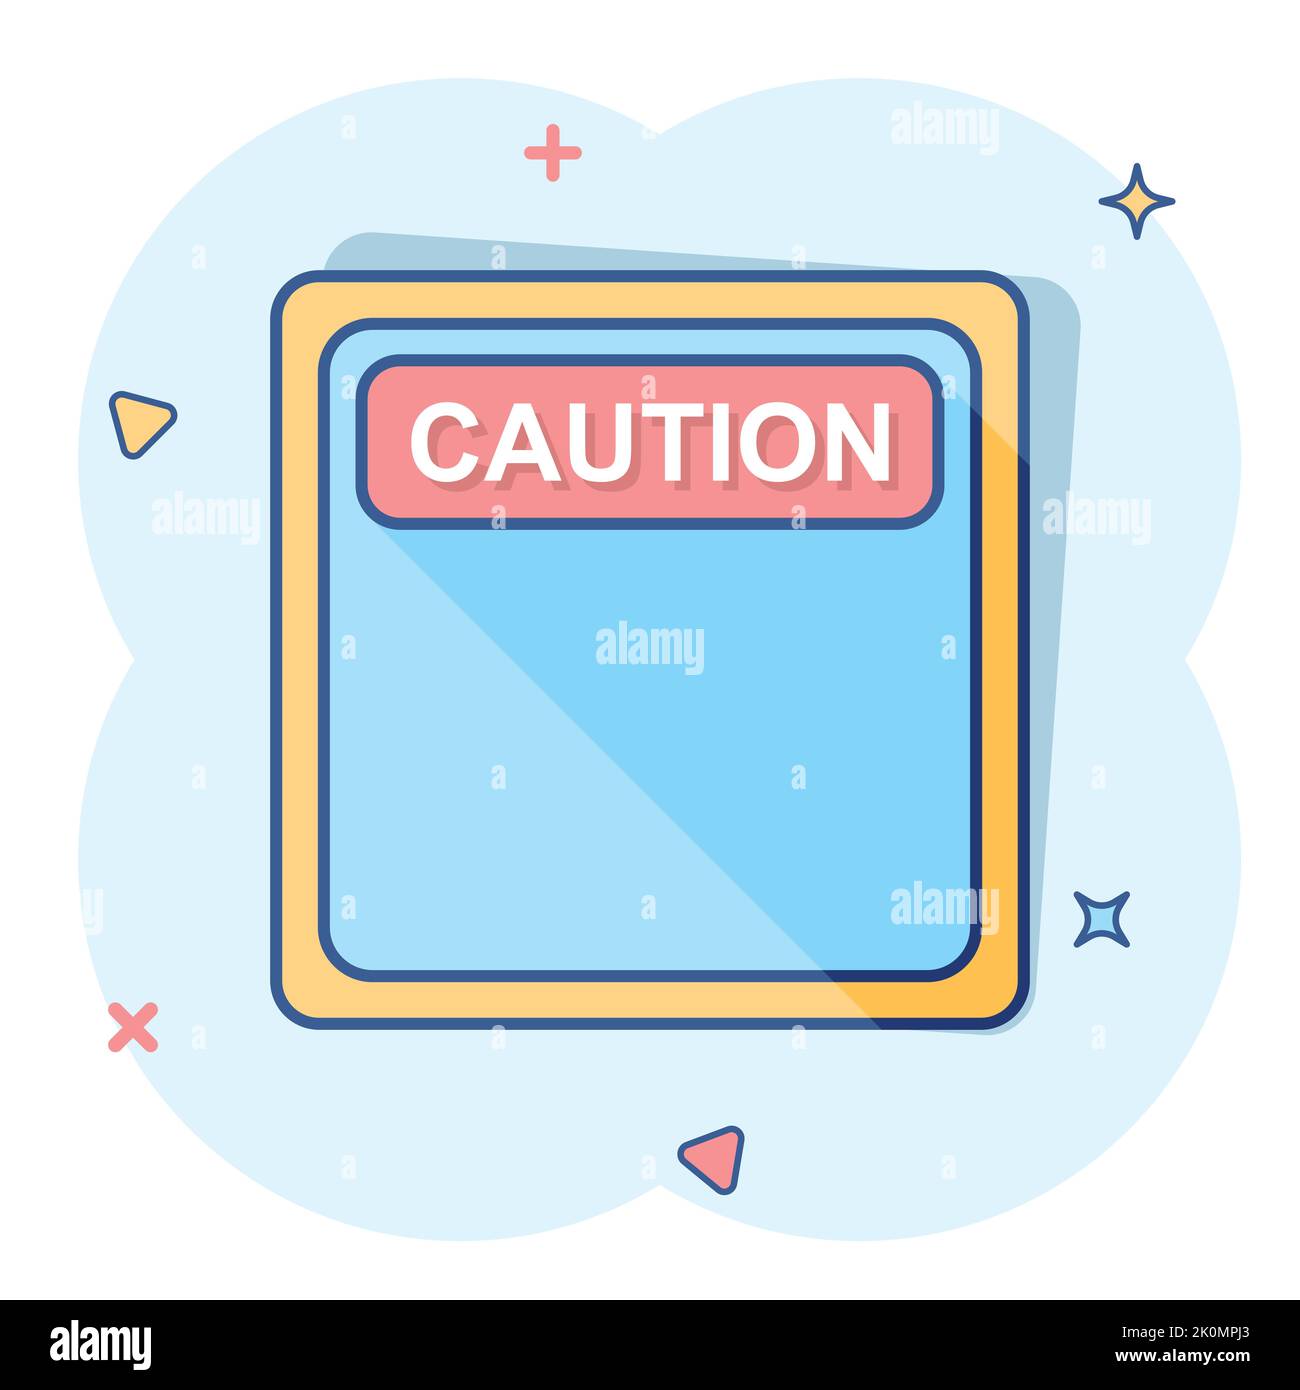 Warning, caution sign icon in comic style. Danger alarm vector cartoon illustration on white background. Alert risk business concept splash effect. Stock Vector